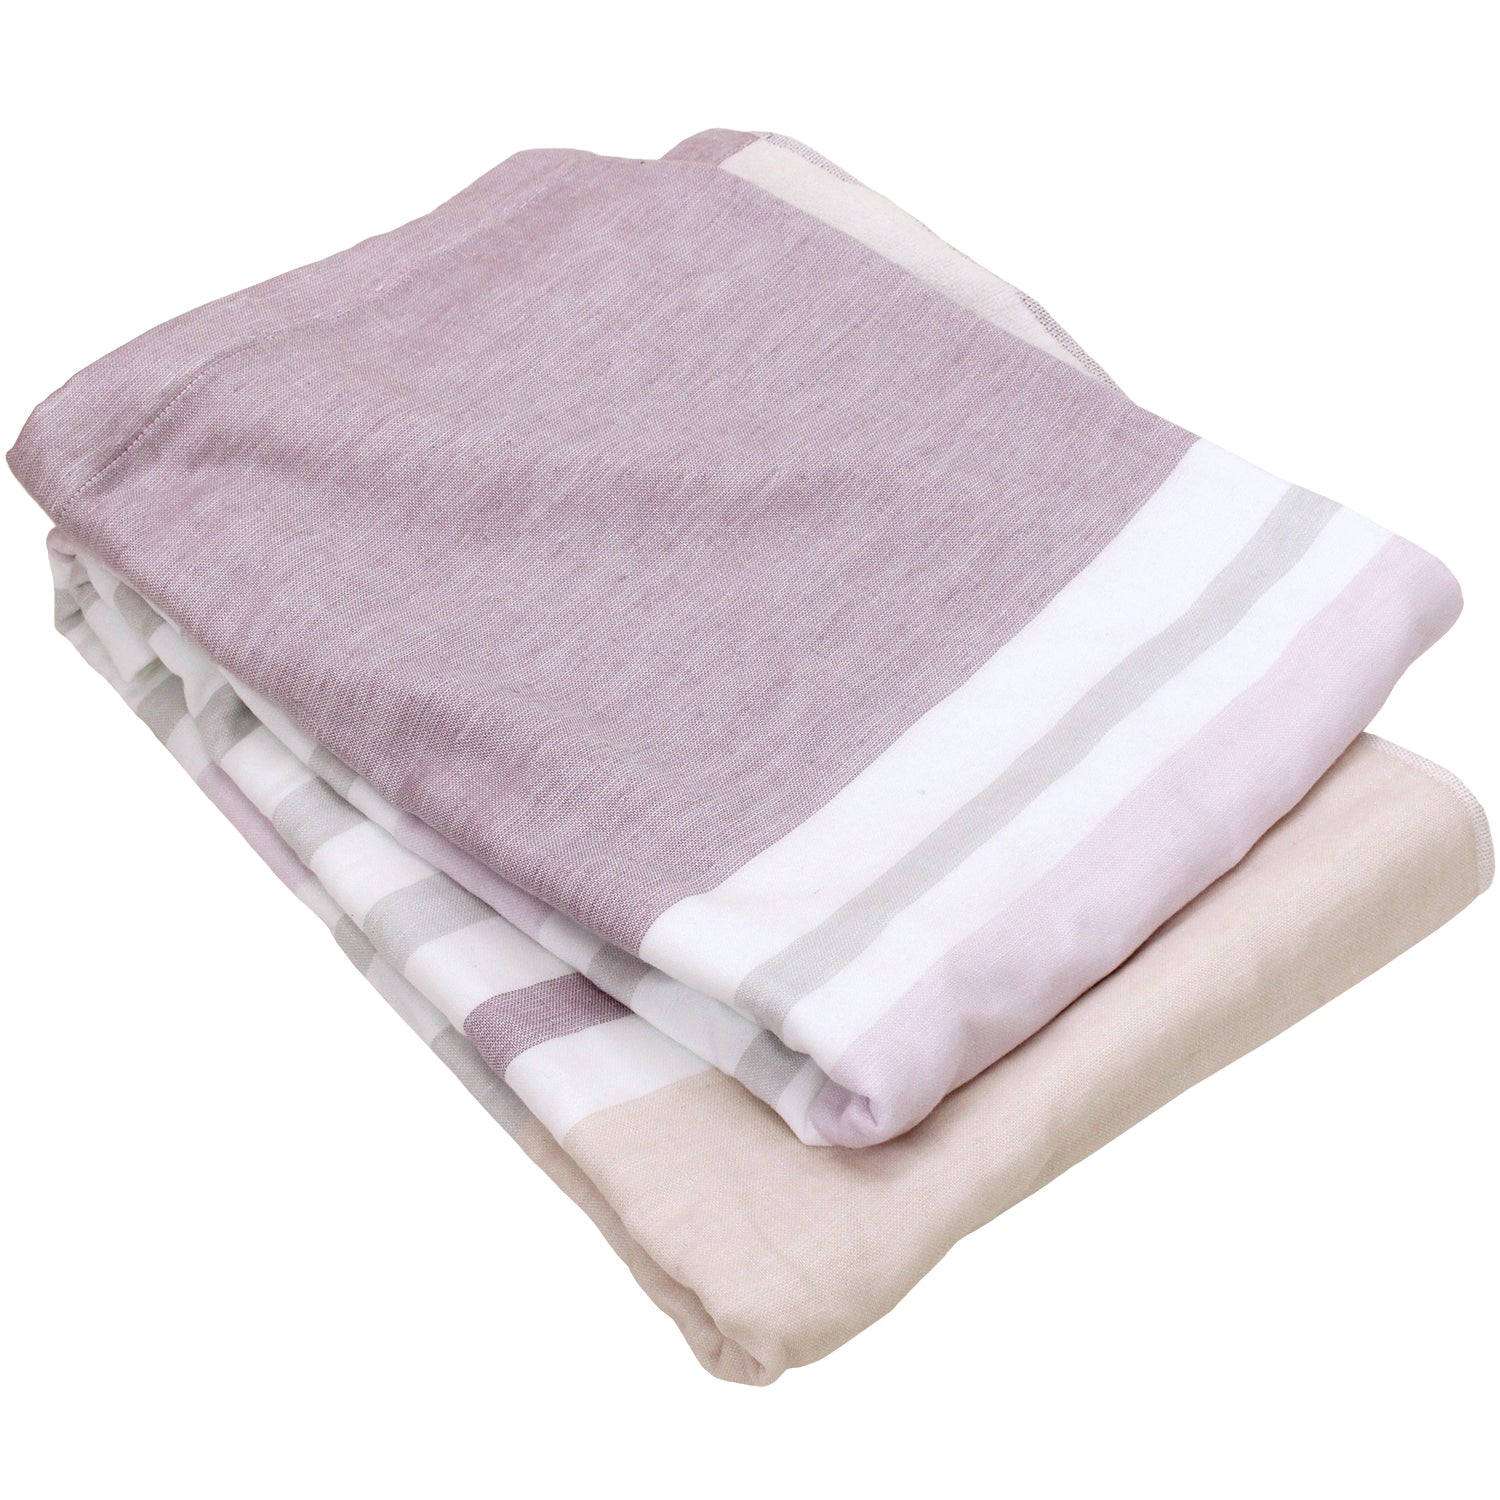 Hiorie Imabari Gauze Water-Absorption Blanket 1 Sheets Cotton 100% Japan